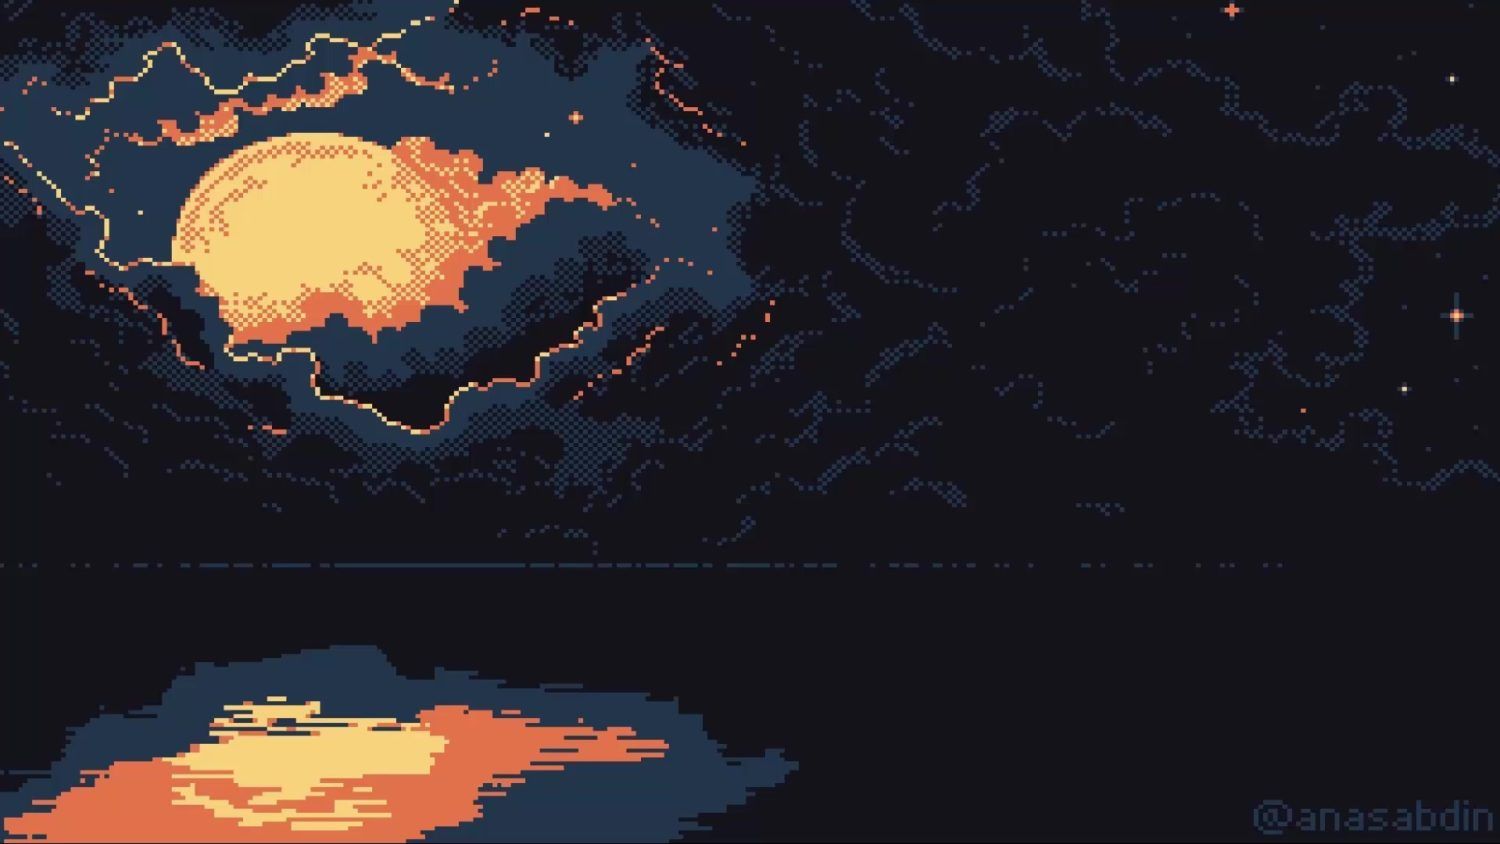 Pixel art of a full moon over a body of water - Pixel art